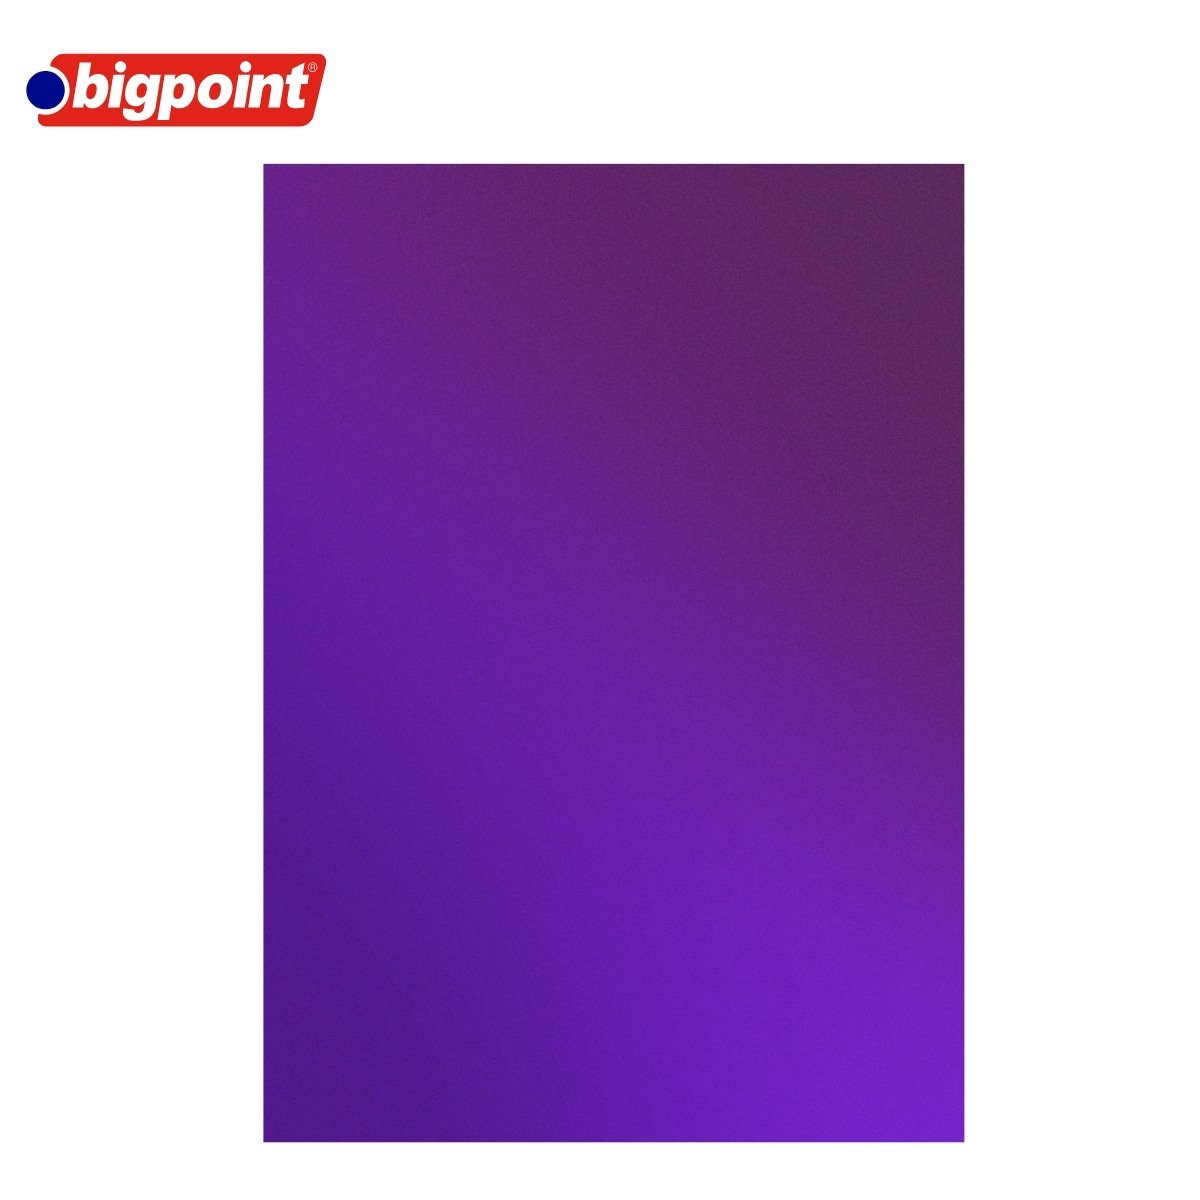 Bigpoint Metalik Renkli Karton 50x70cm Mor 10'lu Poşet